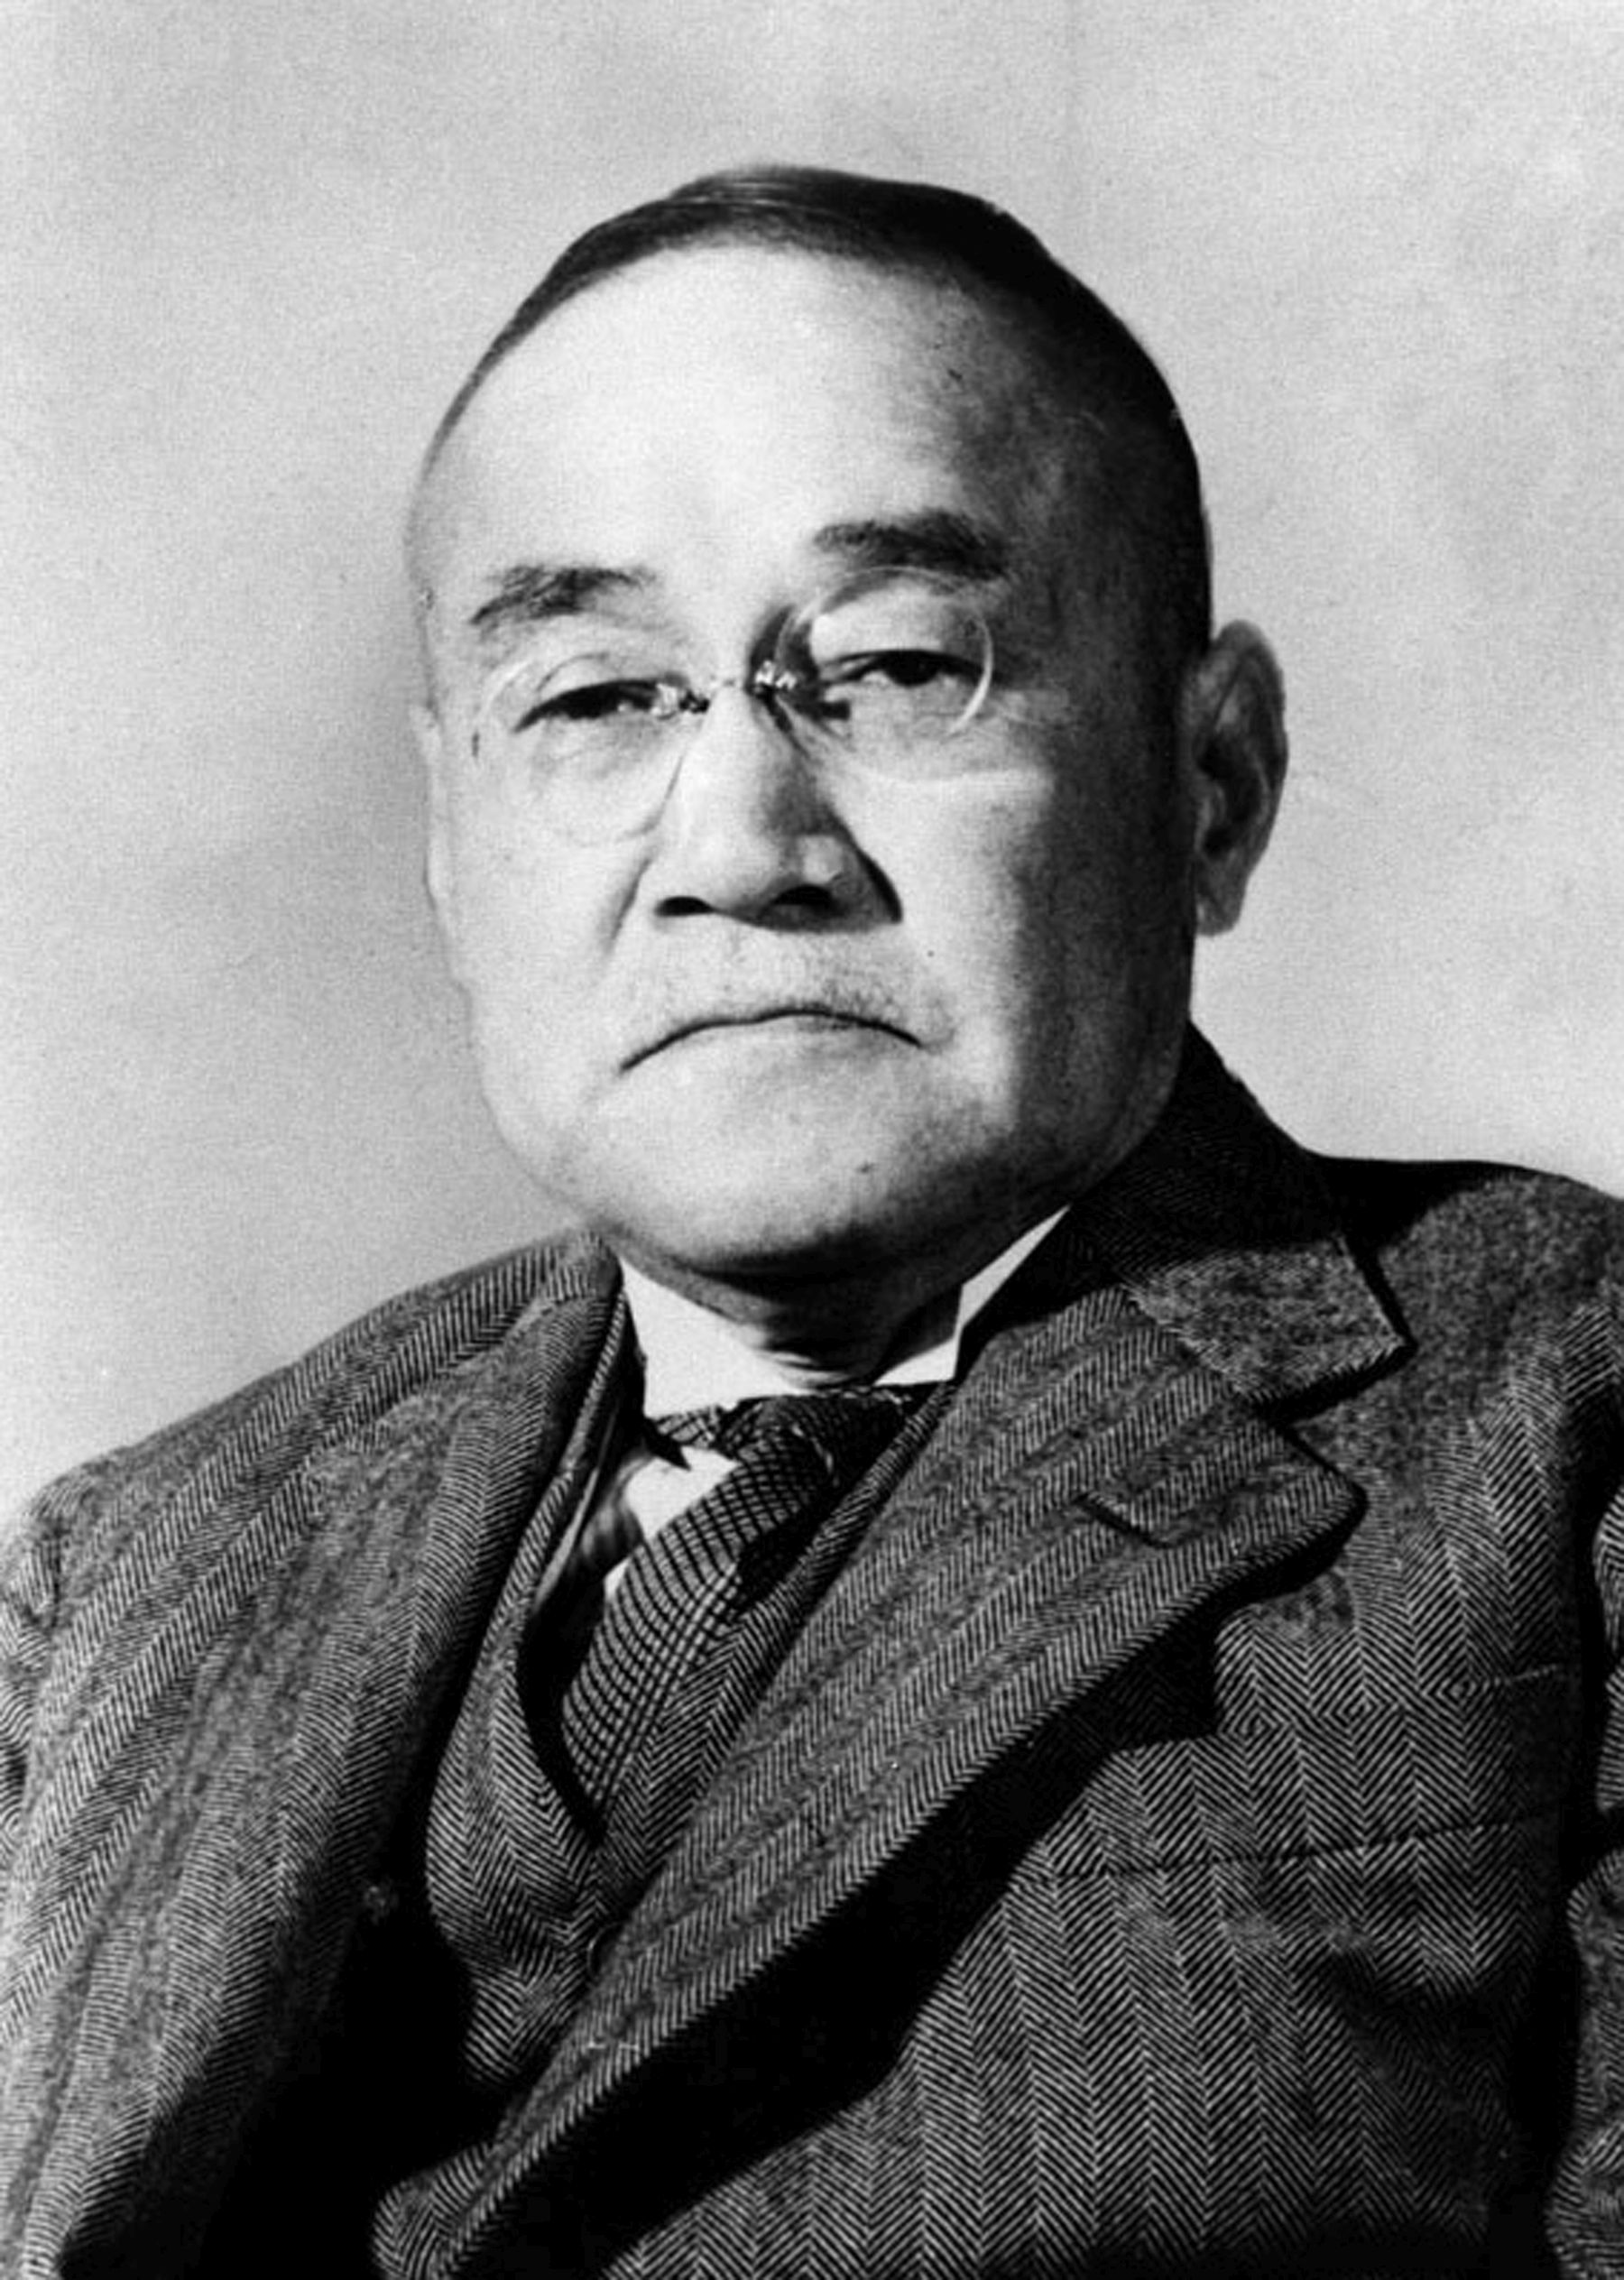 Emperor Showa Favored Japans Rearmament, Documents Reveal 004